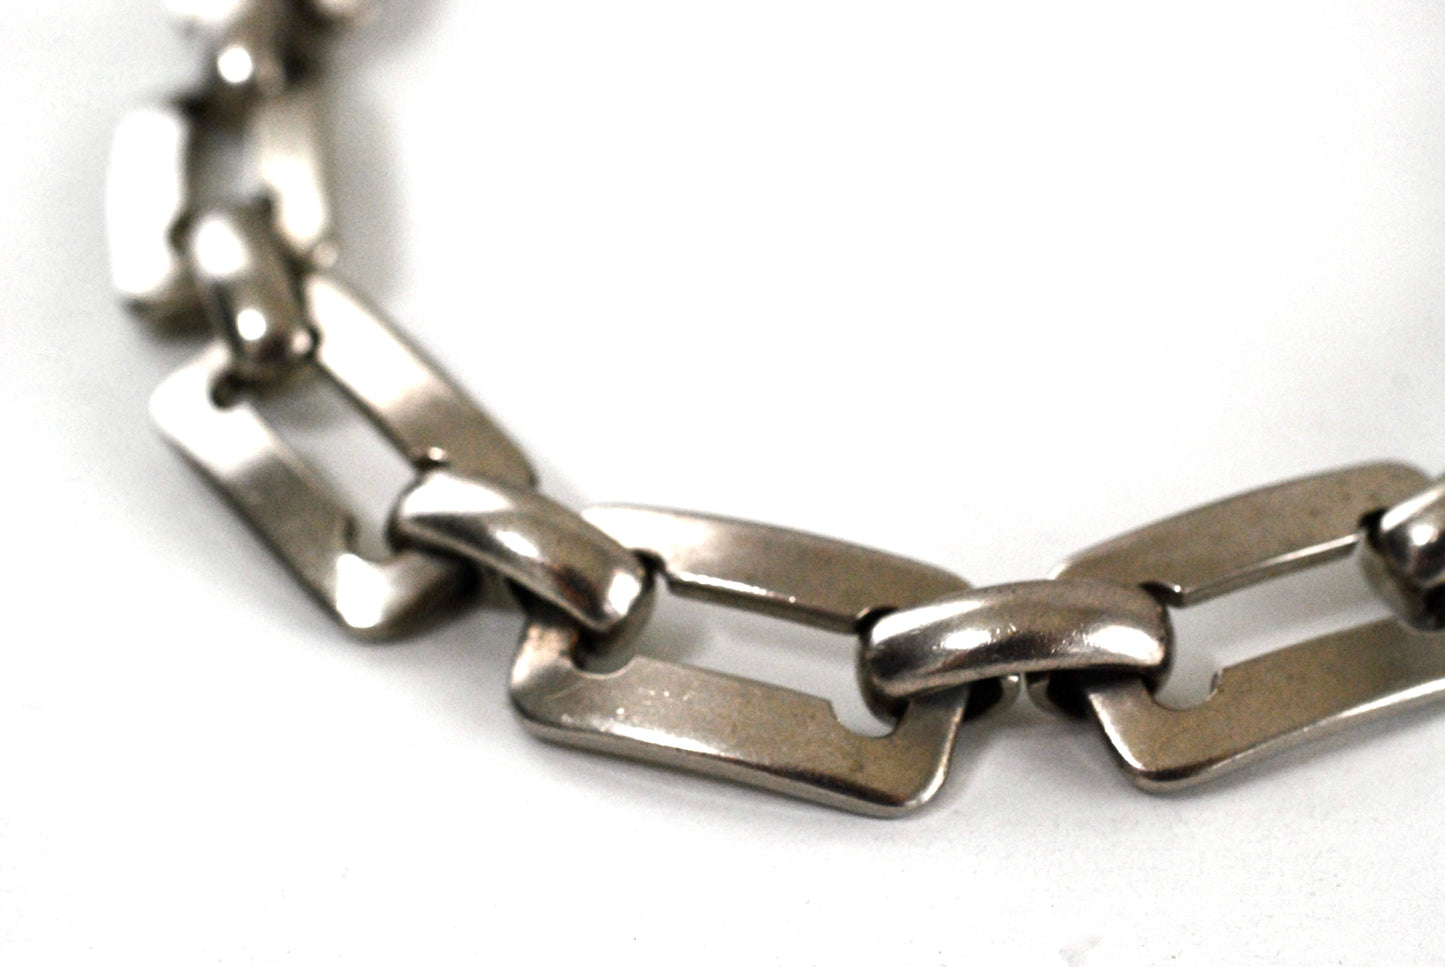 Vintage Chunky Steel Link Choker Necklace